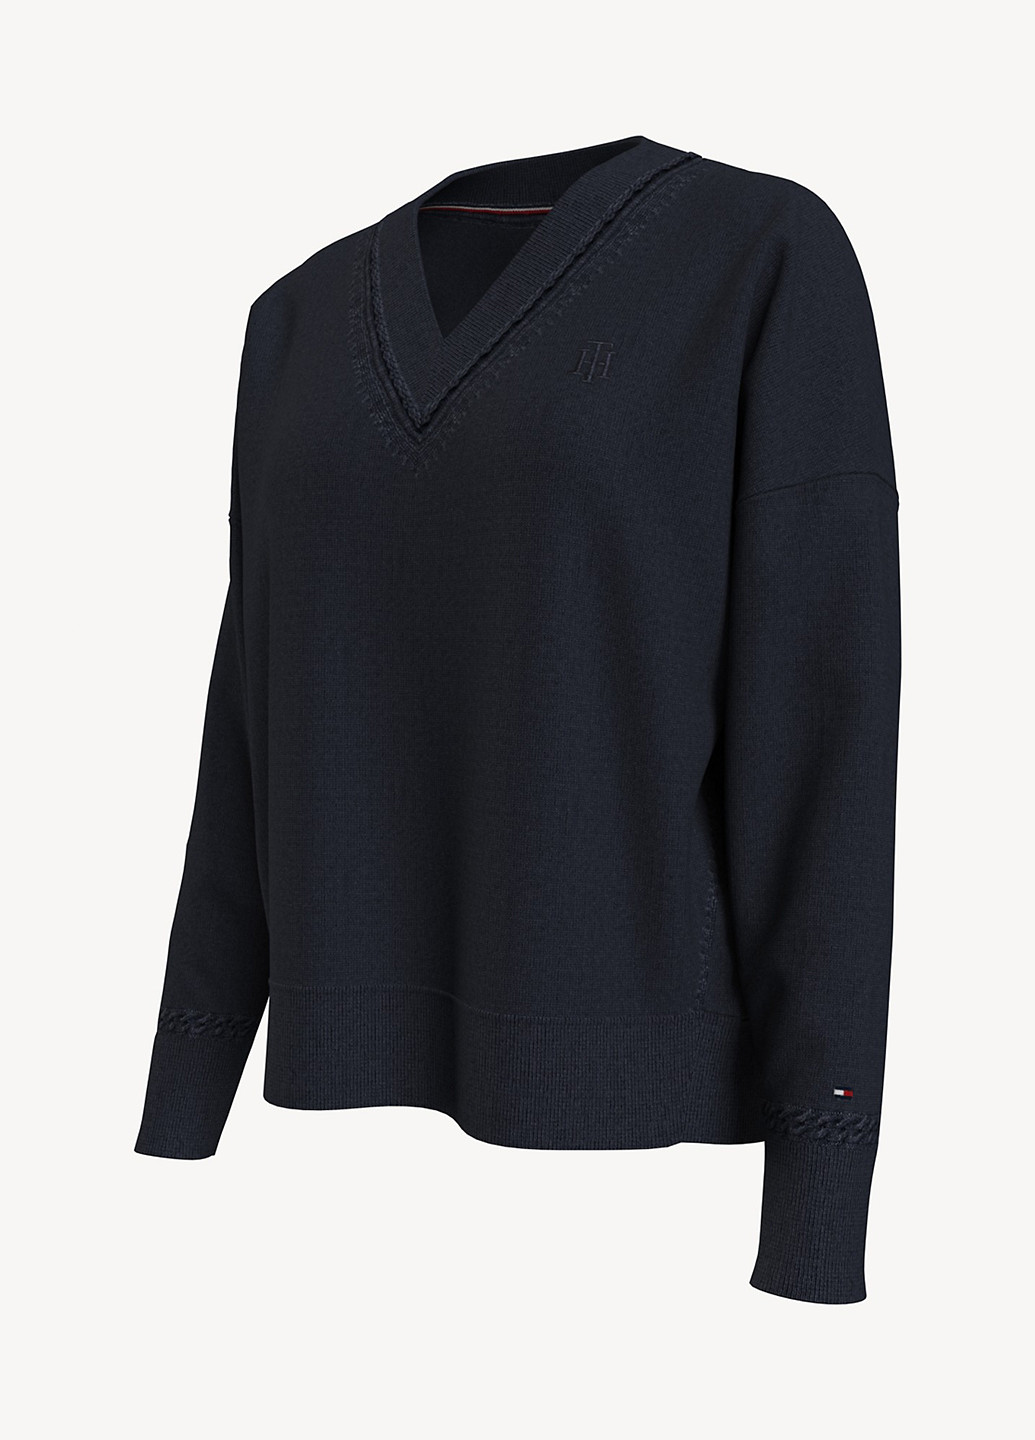 Темно-синий демисезонный пуловер пуловер Tommy Hilfiger